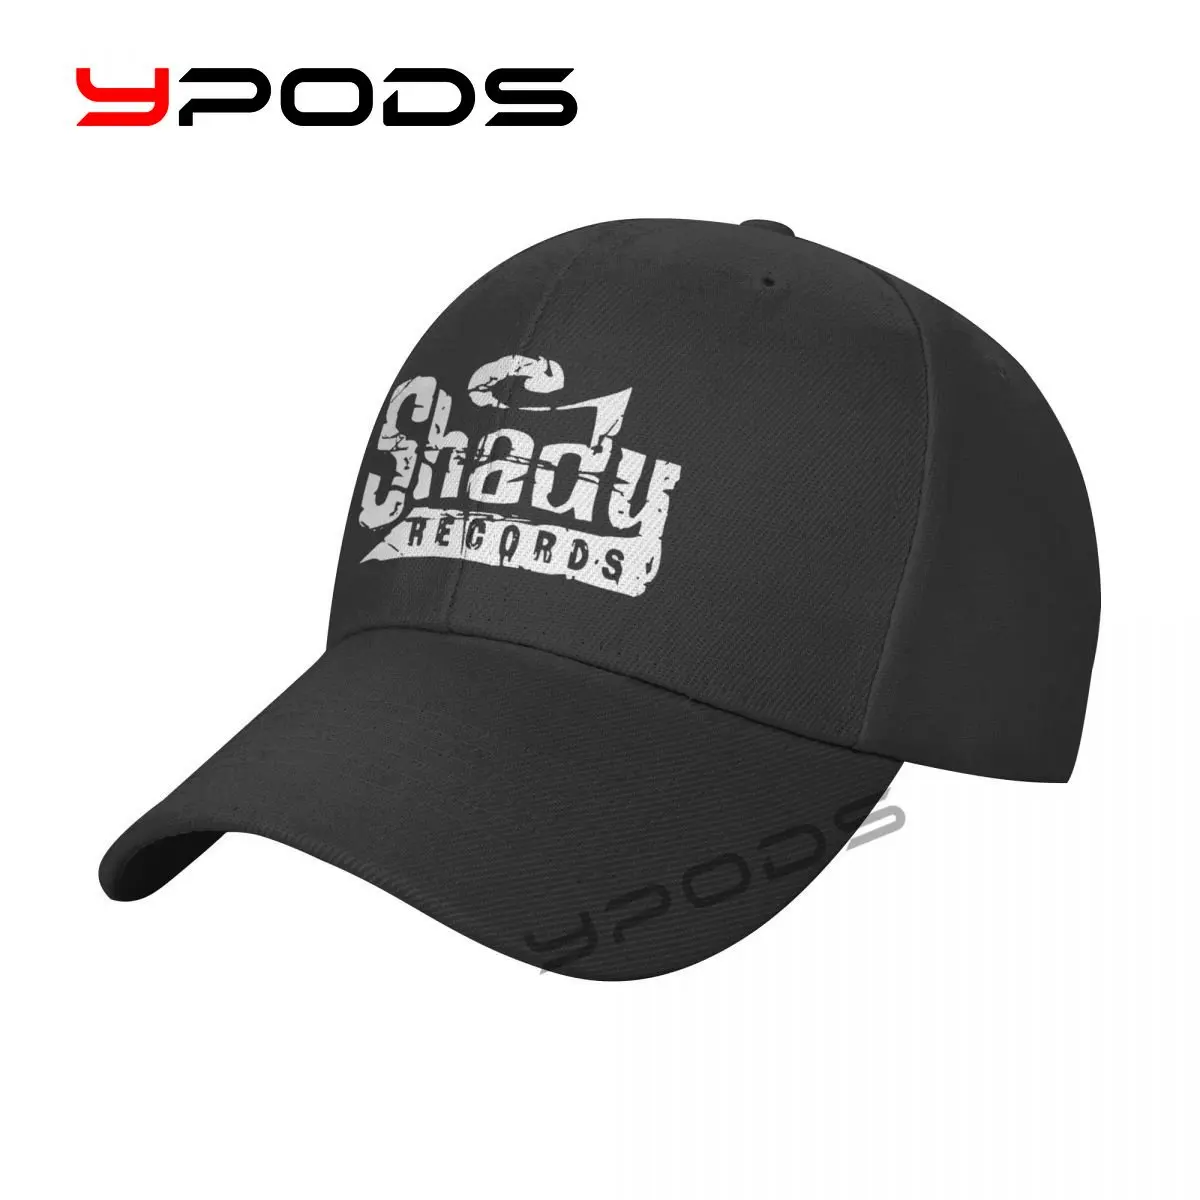 

Shady Records Baseball Caps Women Men Casual Adjustable Hats Snapback Dad Caps